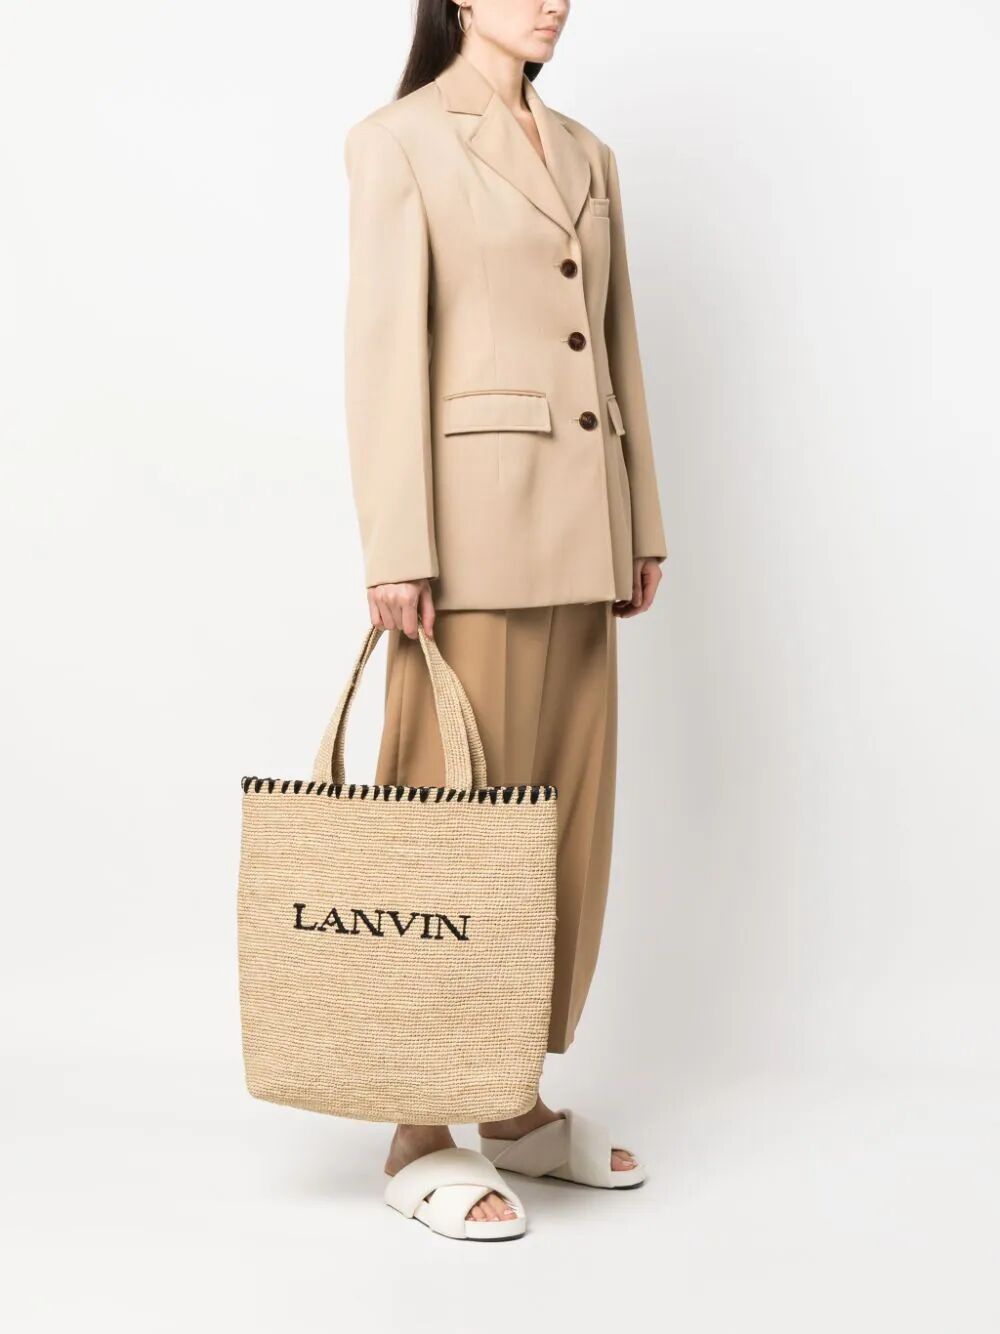 LANVIN Beige Raffia Tote Handbag for Women - SS24 Collection